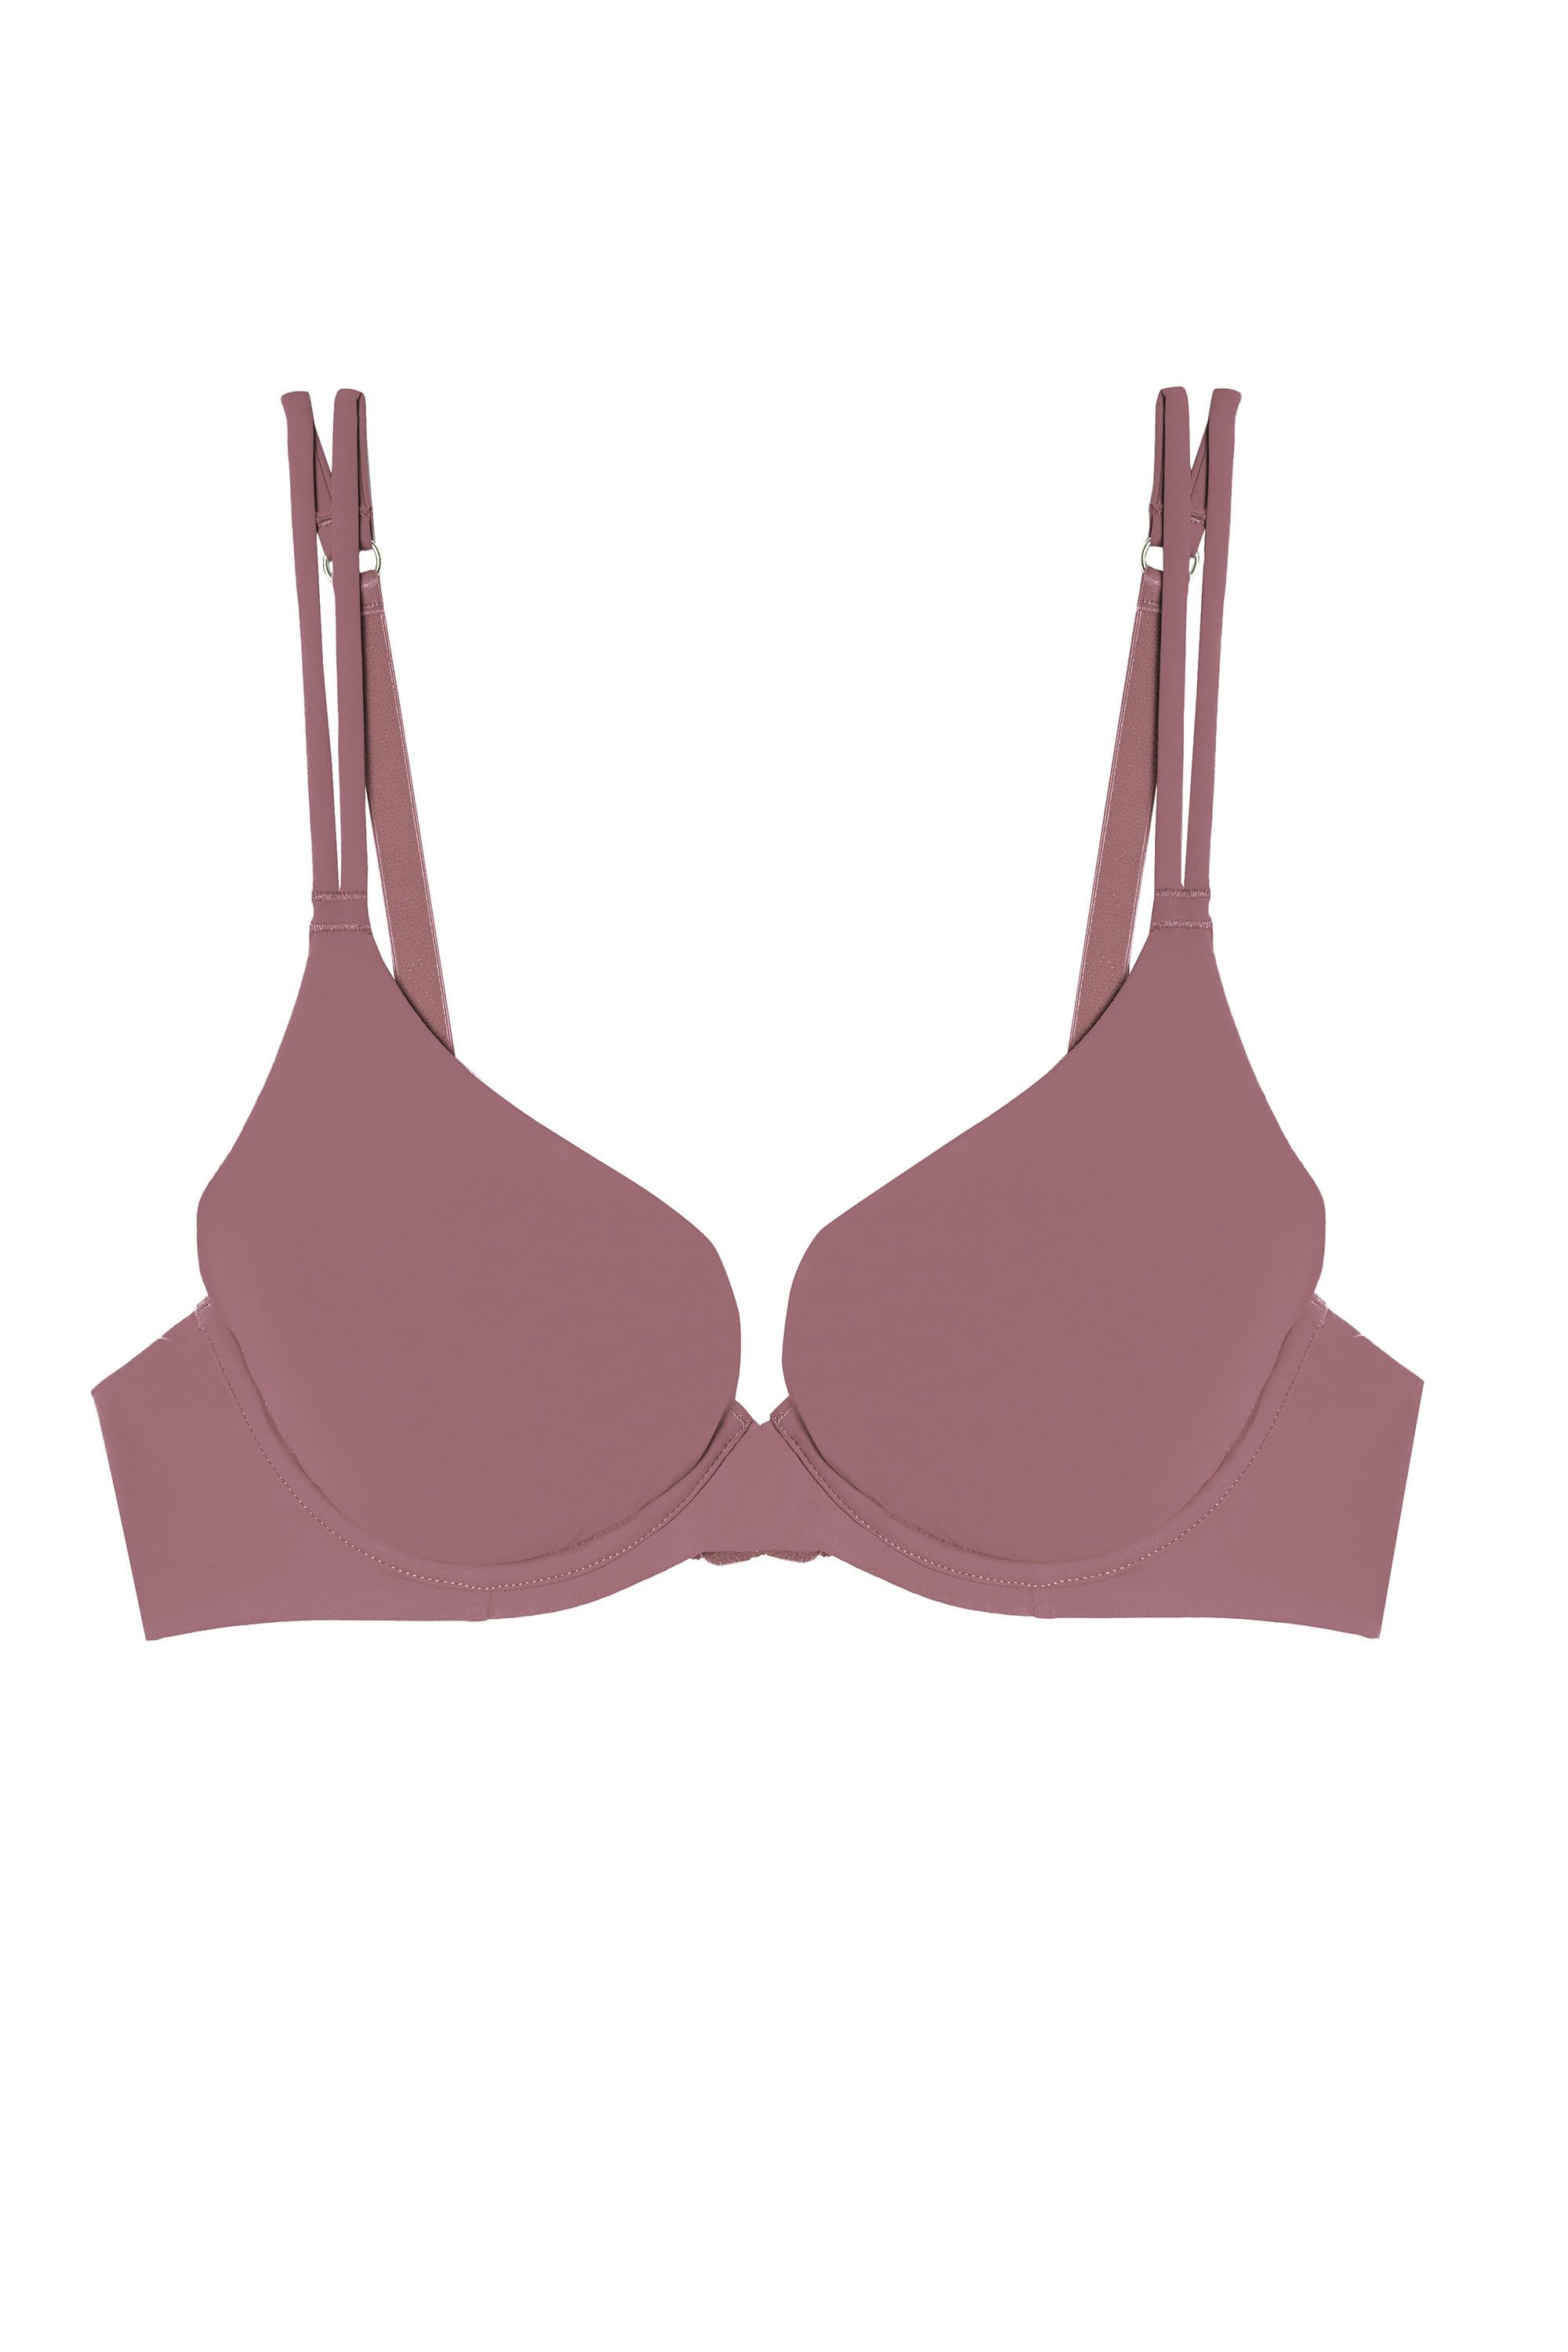 Avenue  Women's Plus Size Fashion Plunge Bra - Hot Pink - 44c : Target